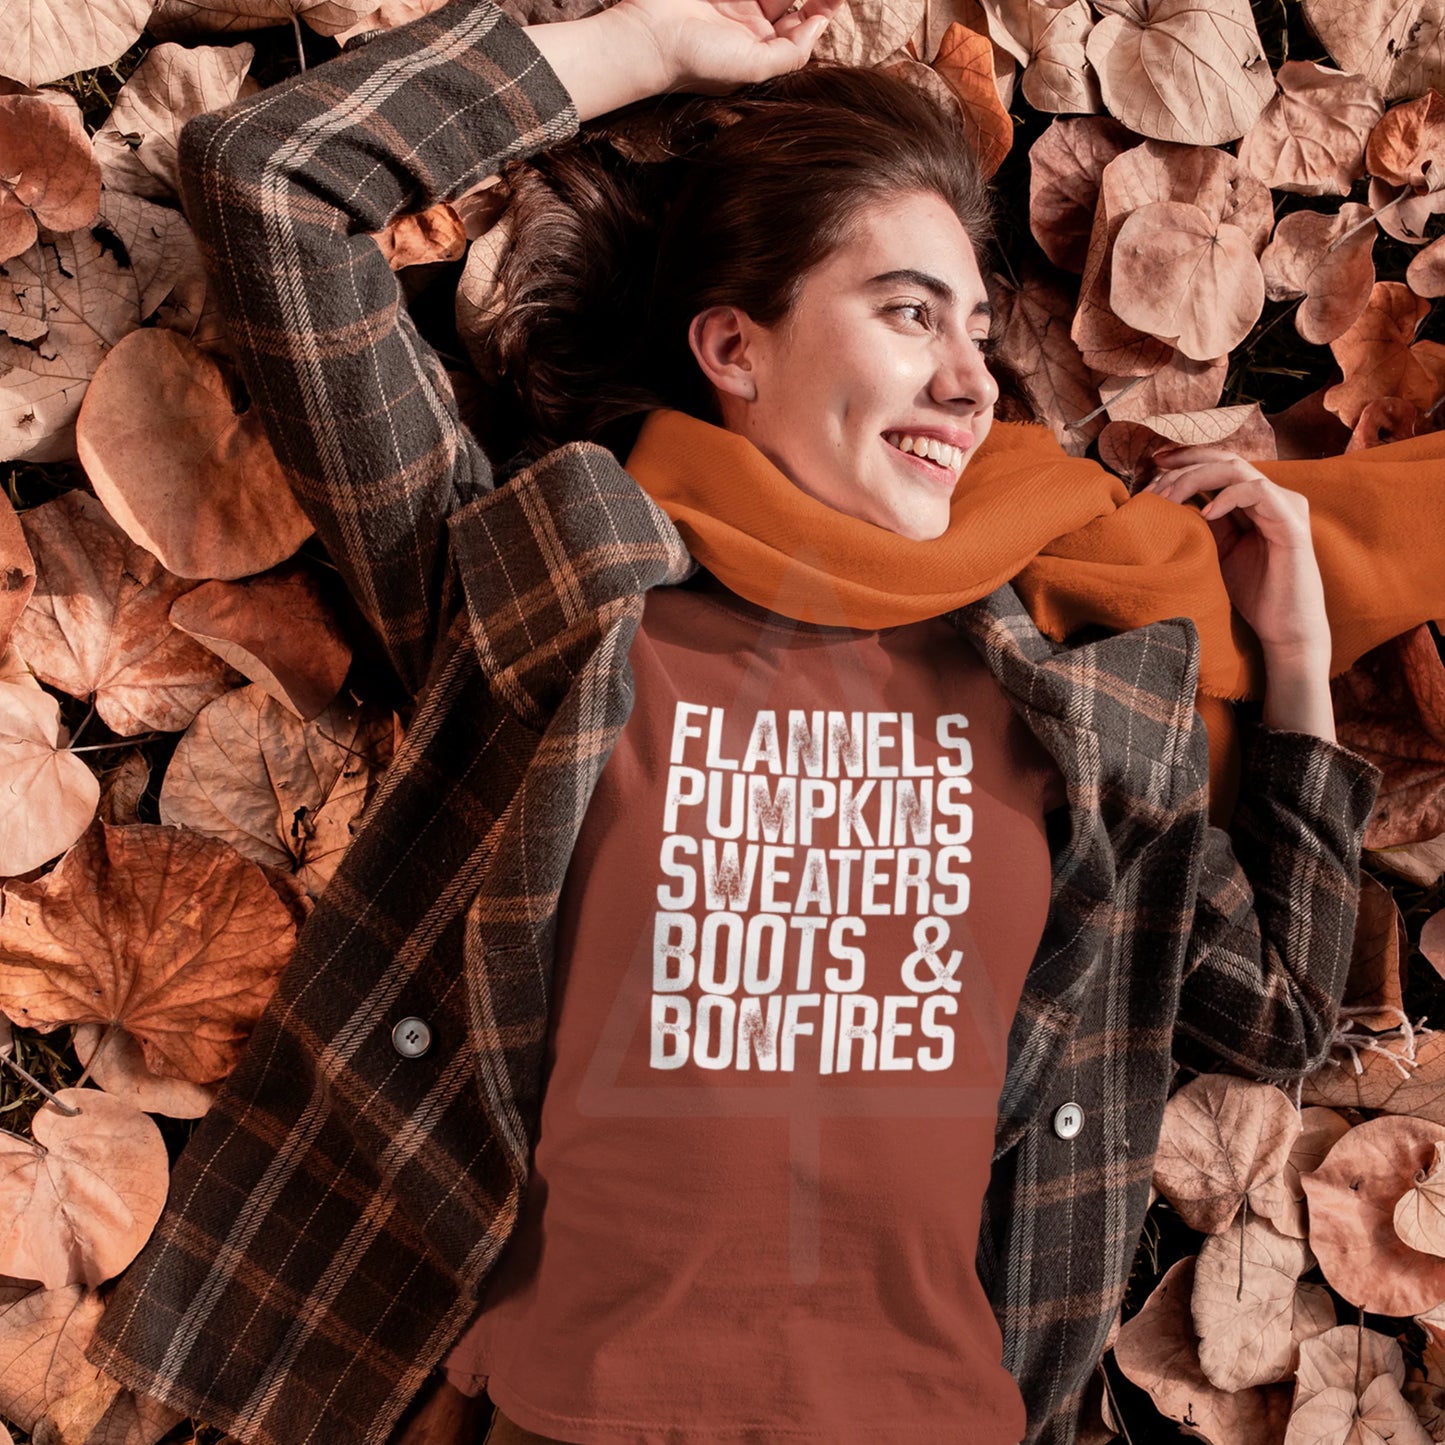 Flannels pumpkins sweaters boots